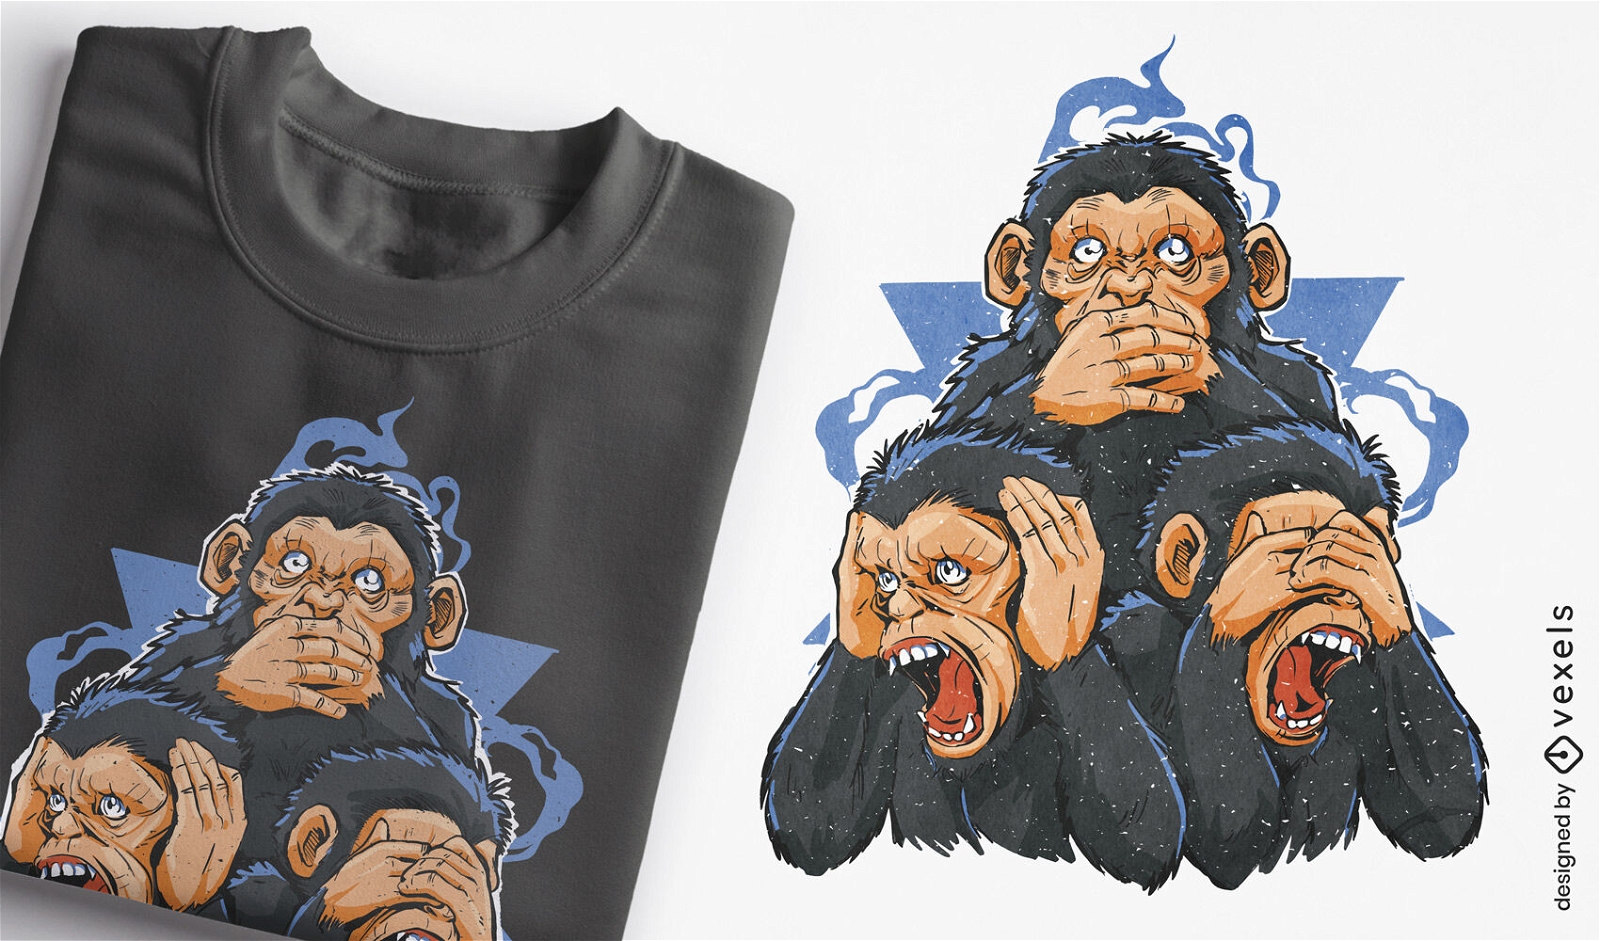 Dise?o de camiseta con ilustraci?n de tres monos.